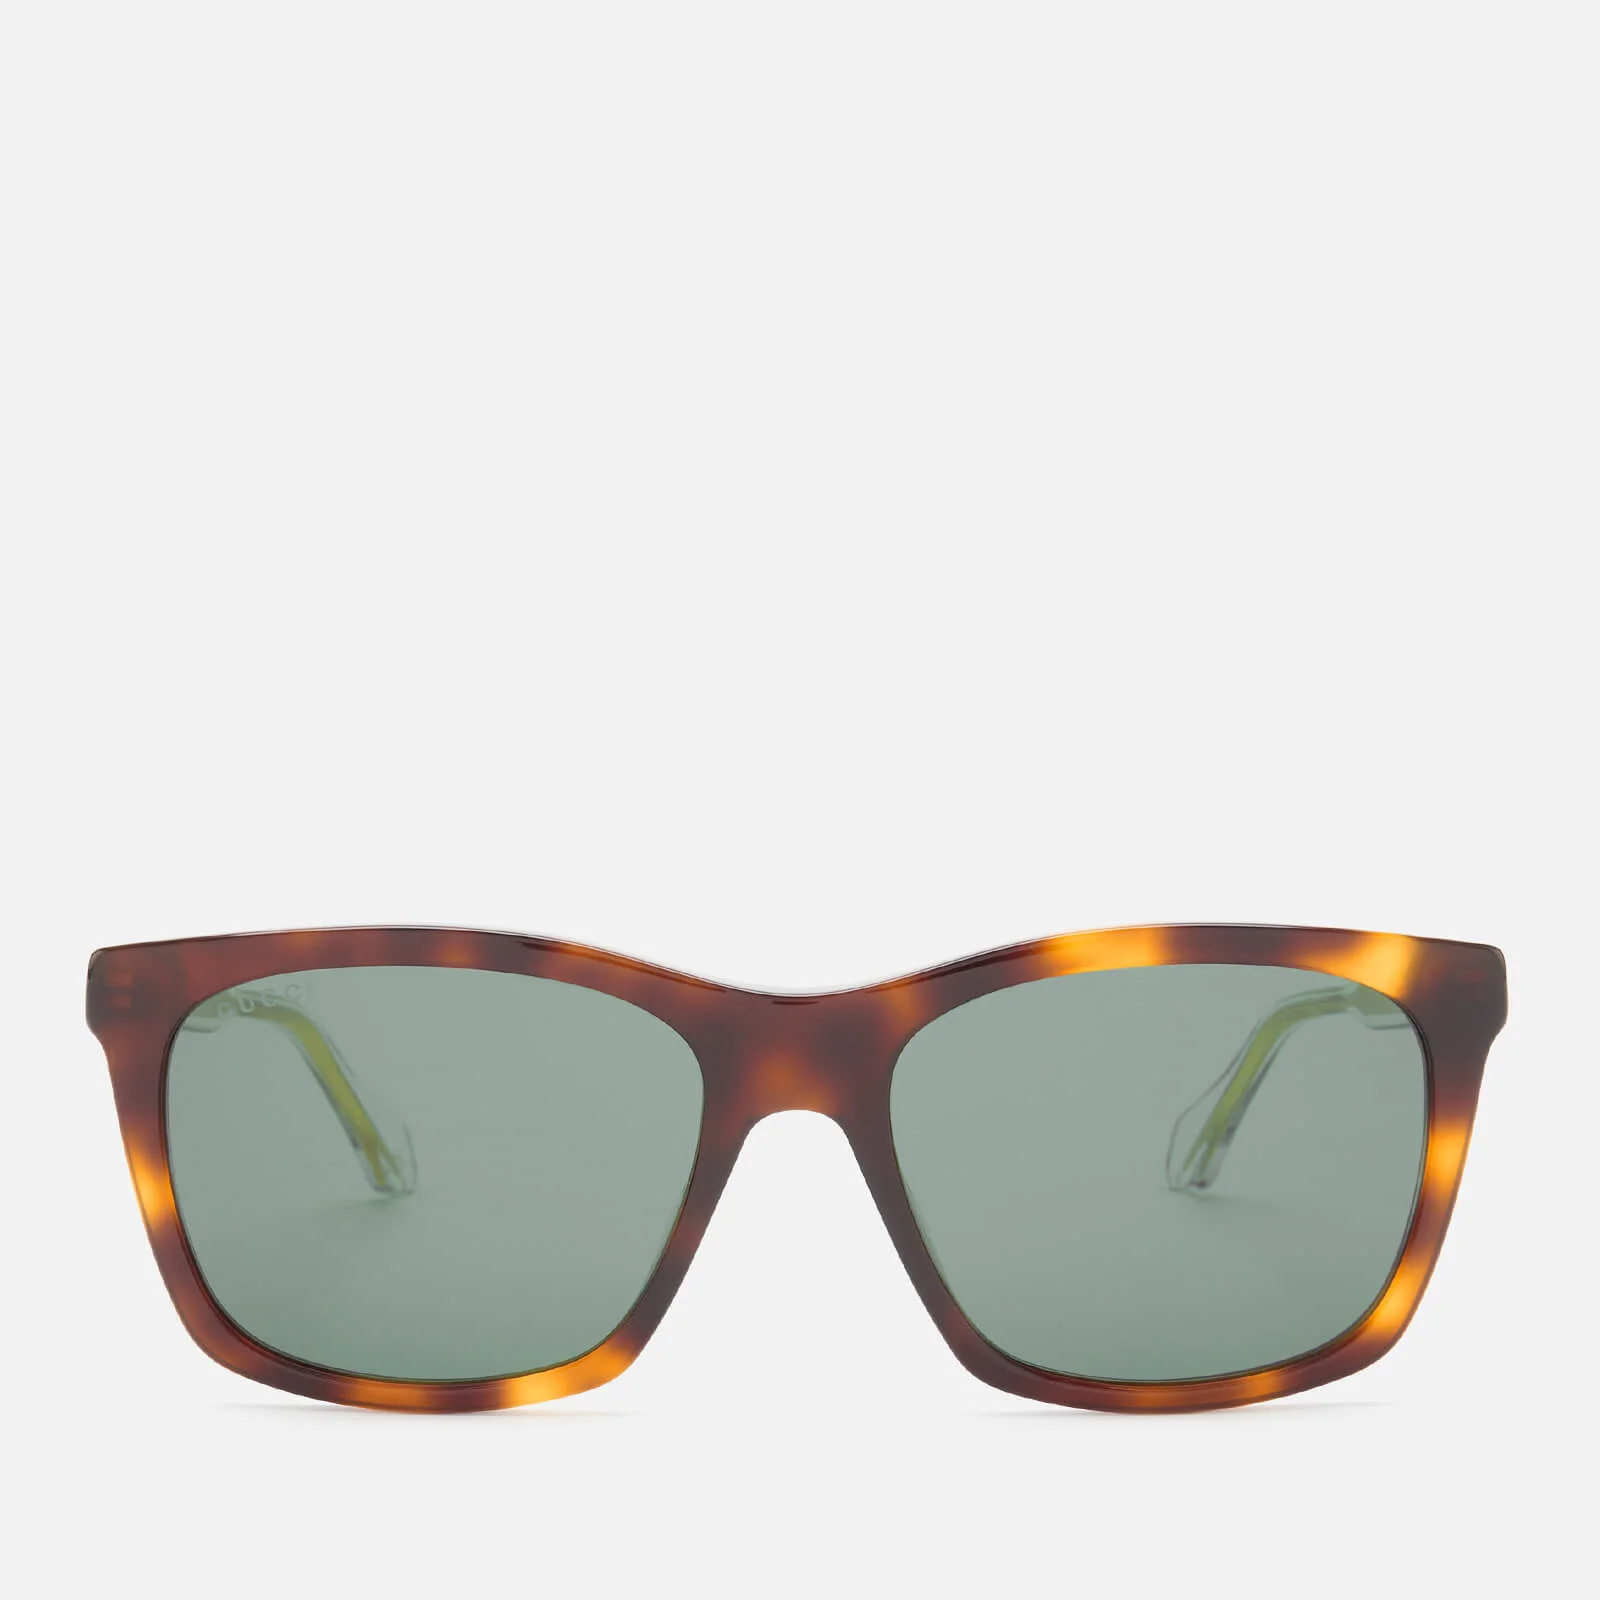 Gucci Men's Acetate Square Frame Sunglasses - Havana/Crystal/Green Image 1